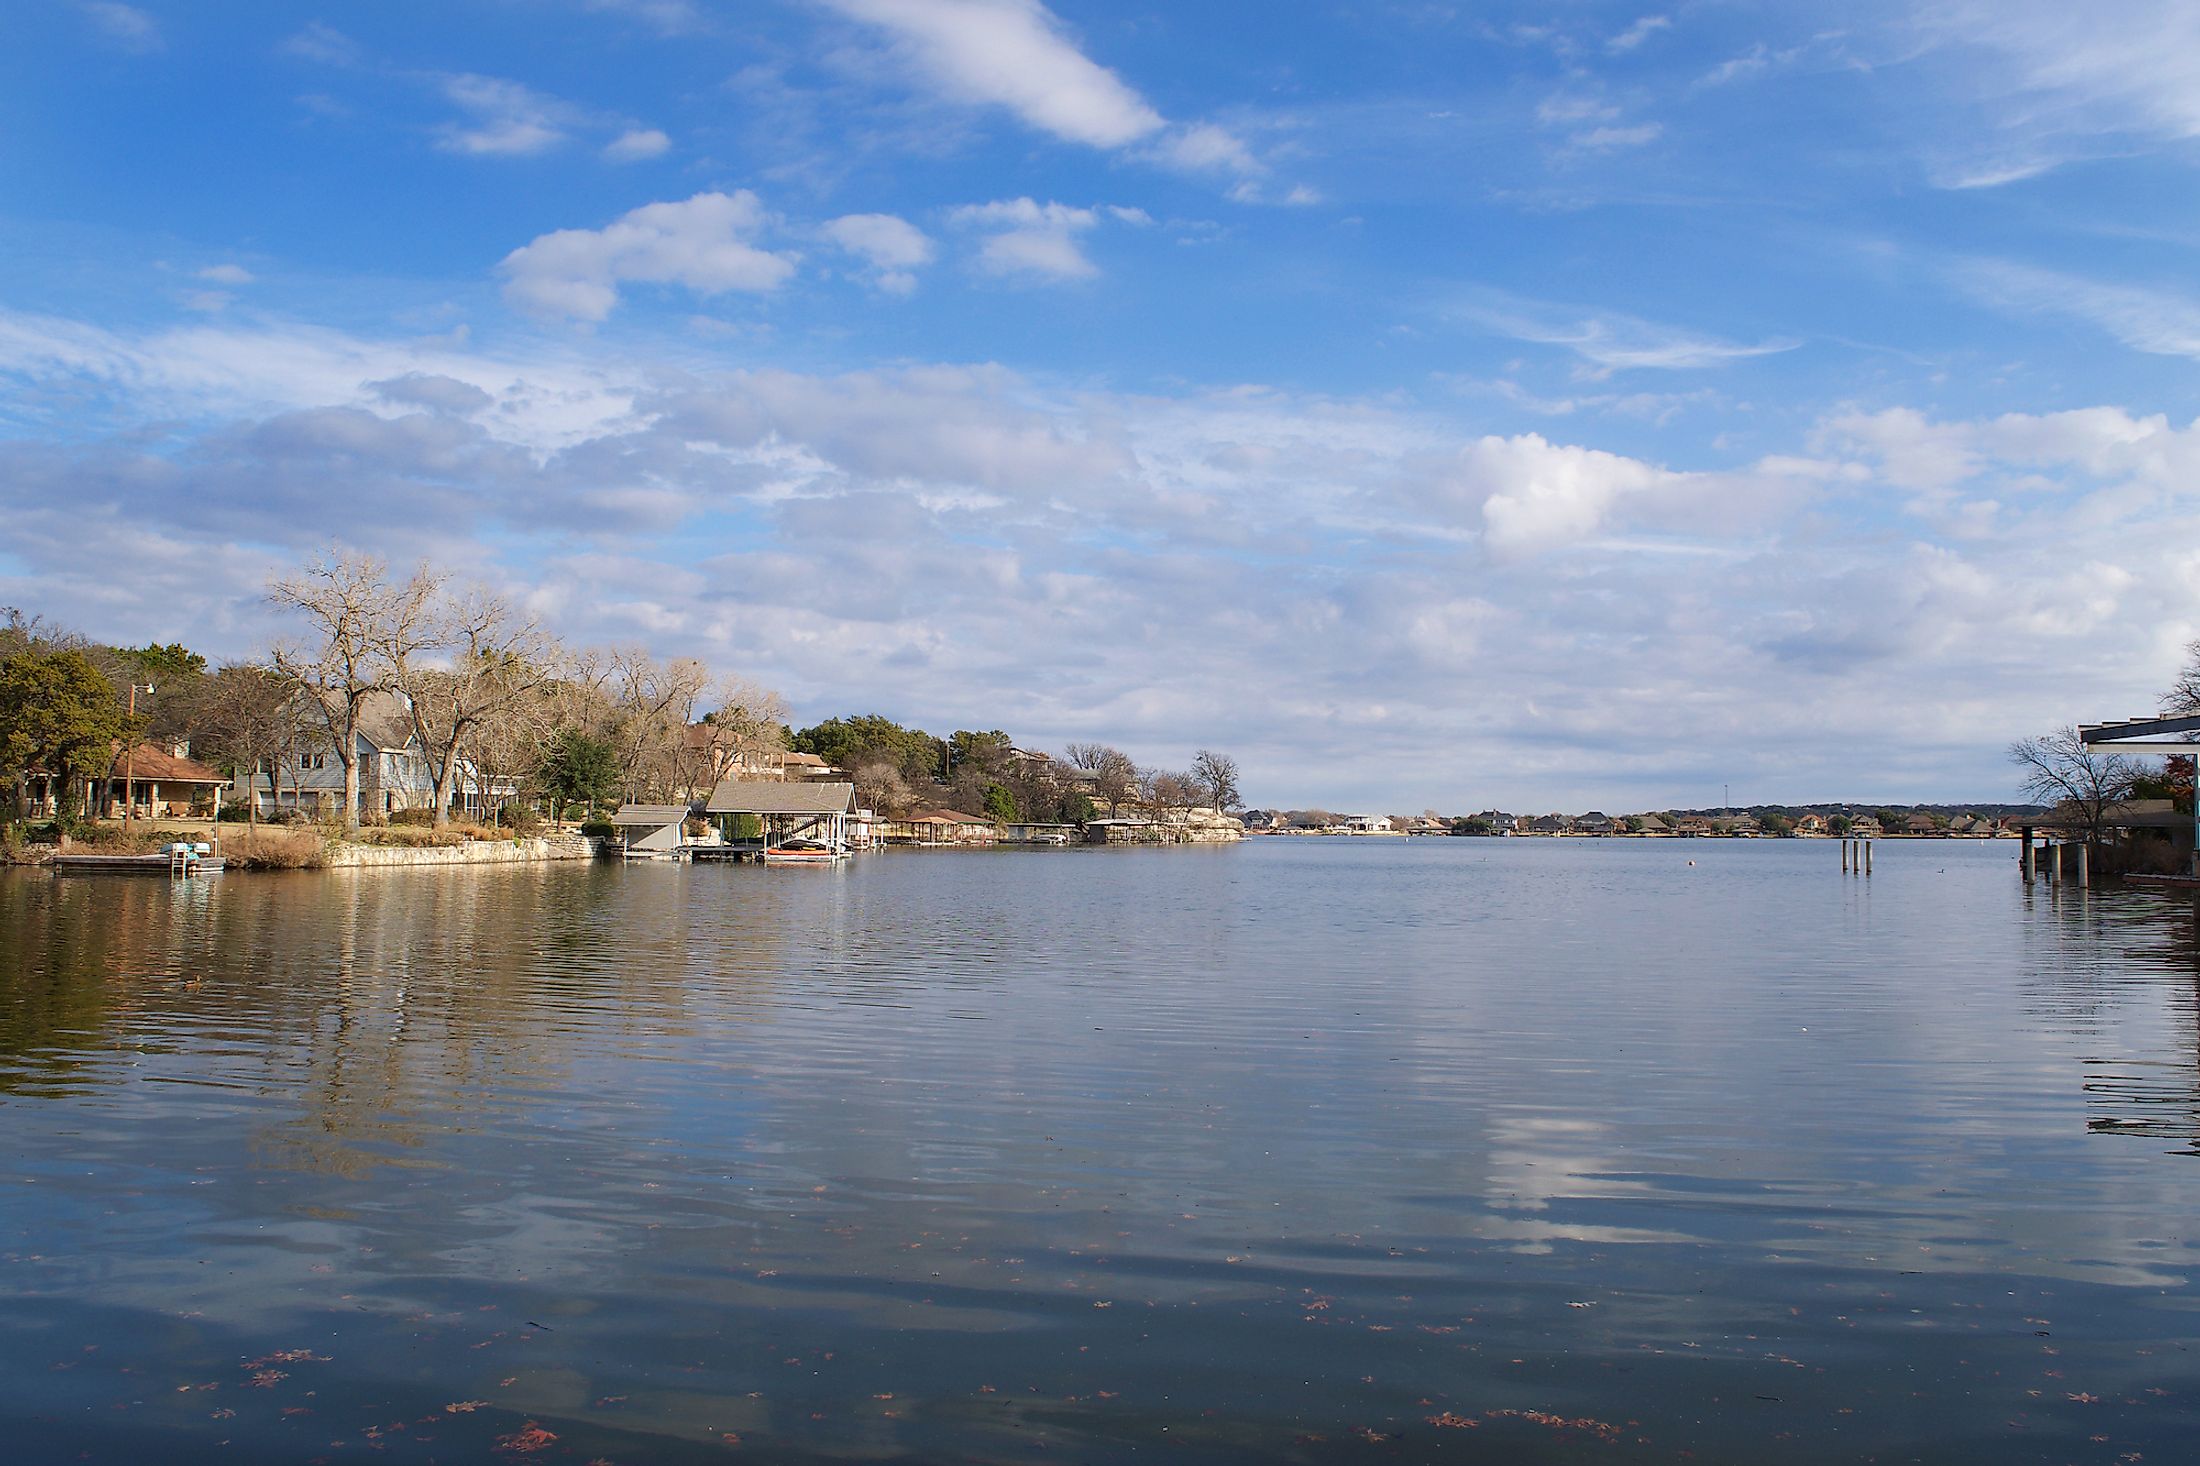 A calm, relaxing day on Lake Granbury in Granbury, Texas.